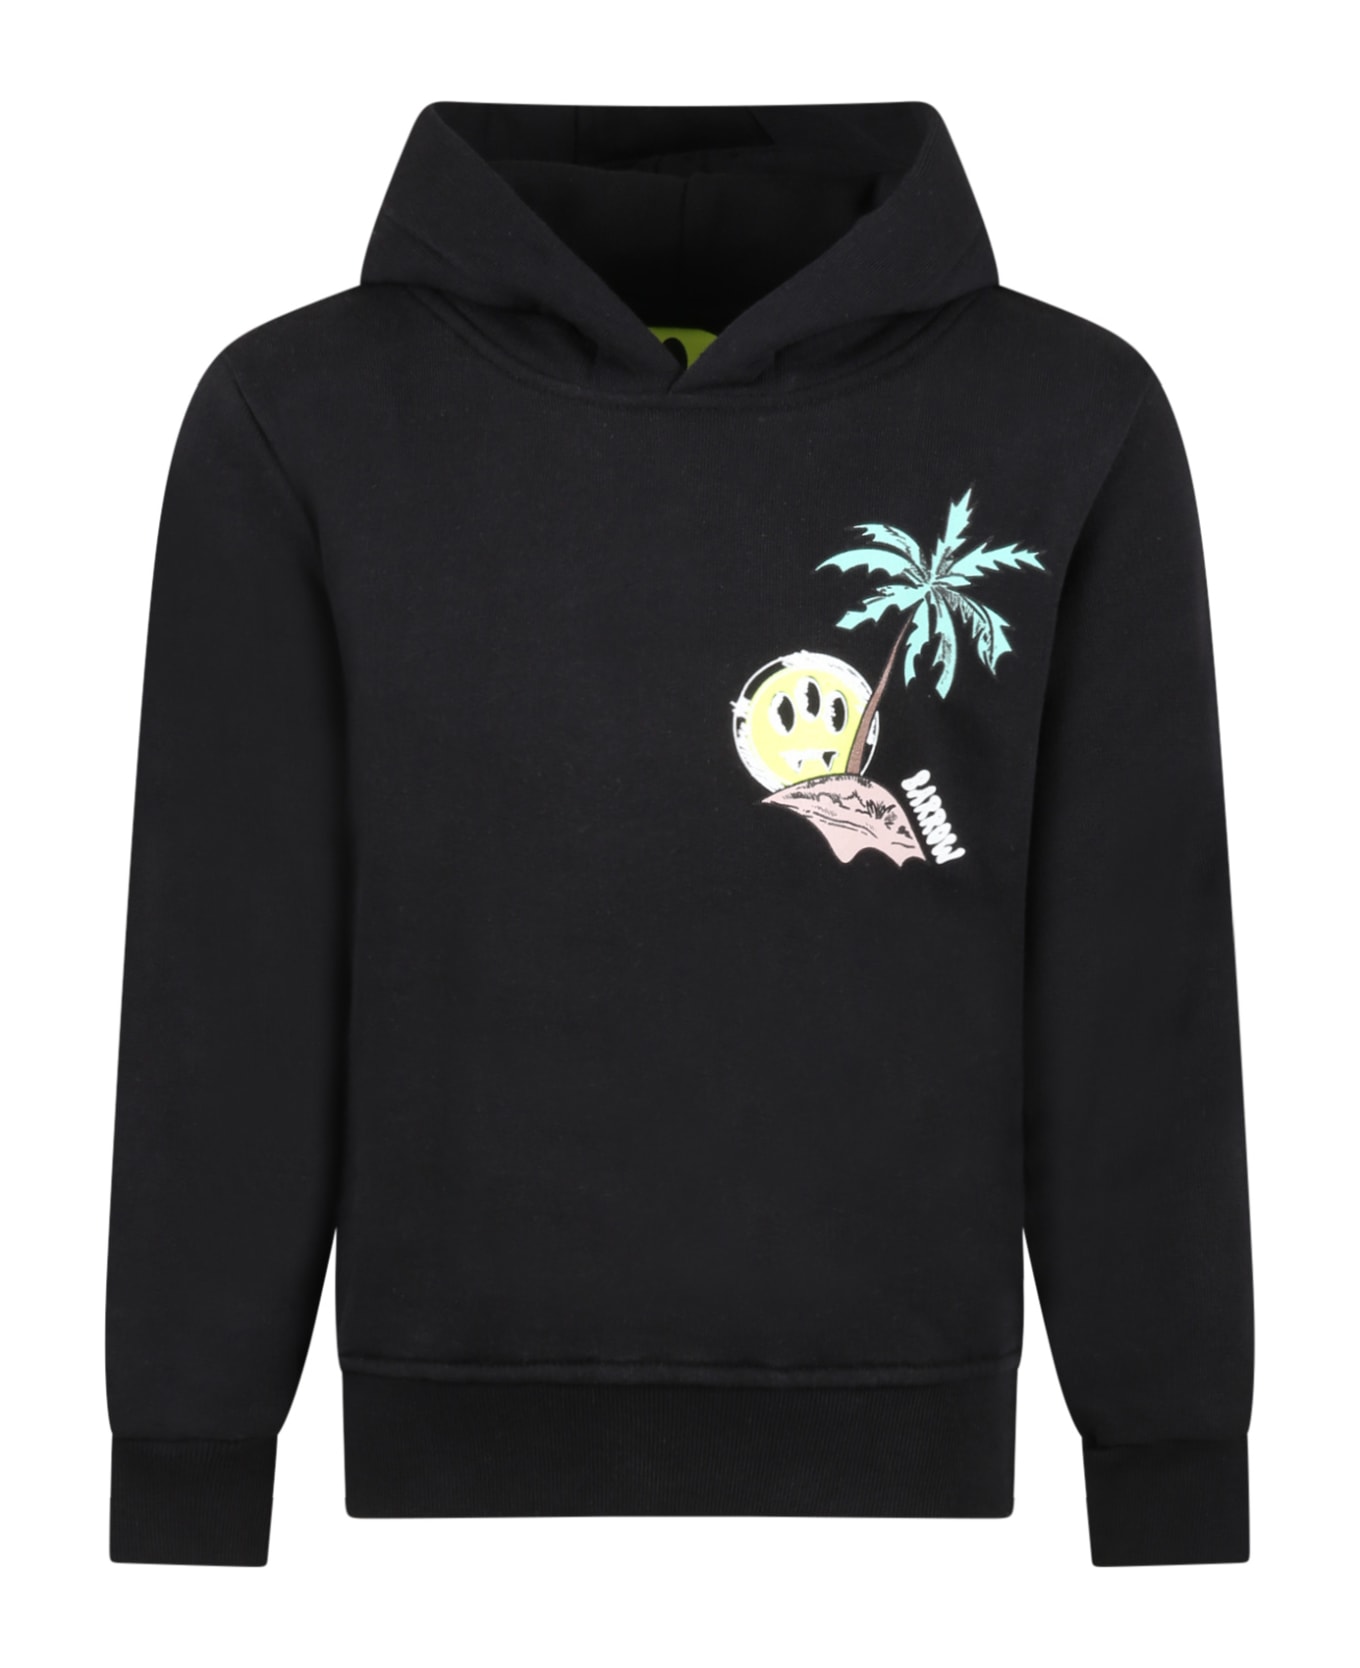 Barrow Black Sweatshirt For Kids With Palm Tree And Smiley - Nero